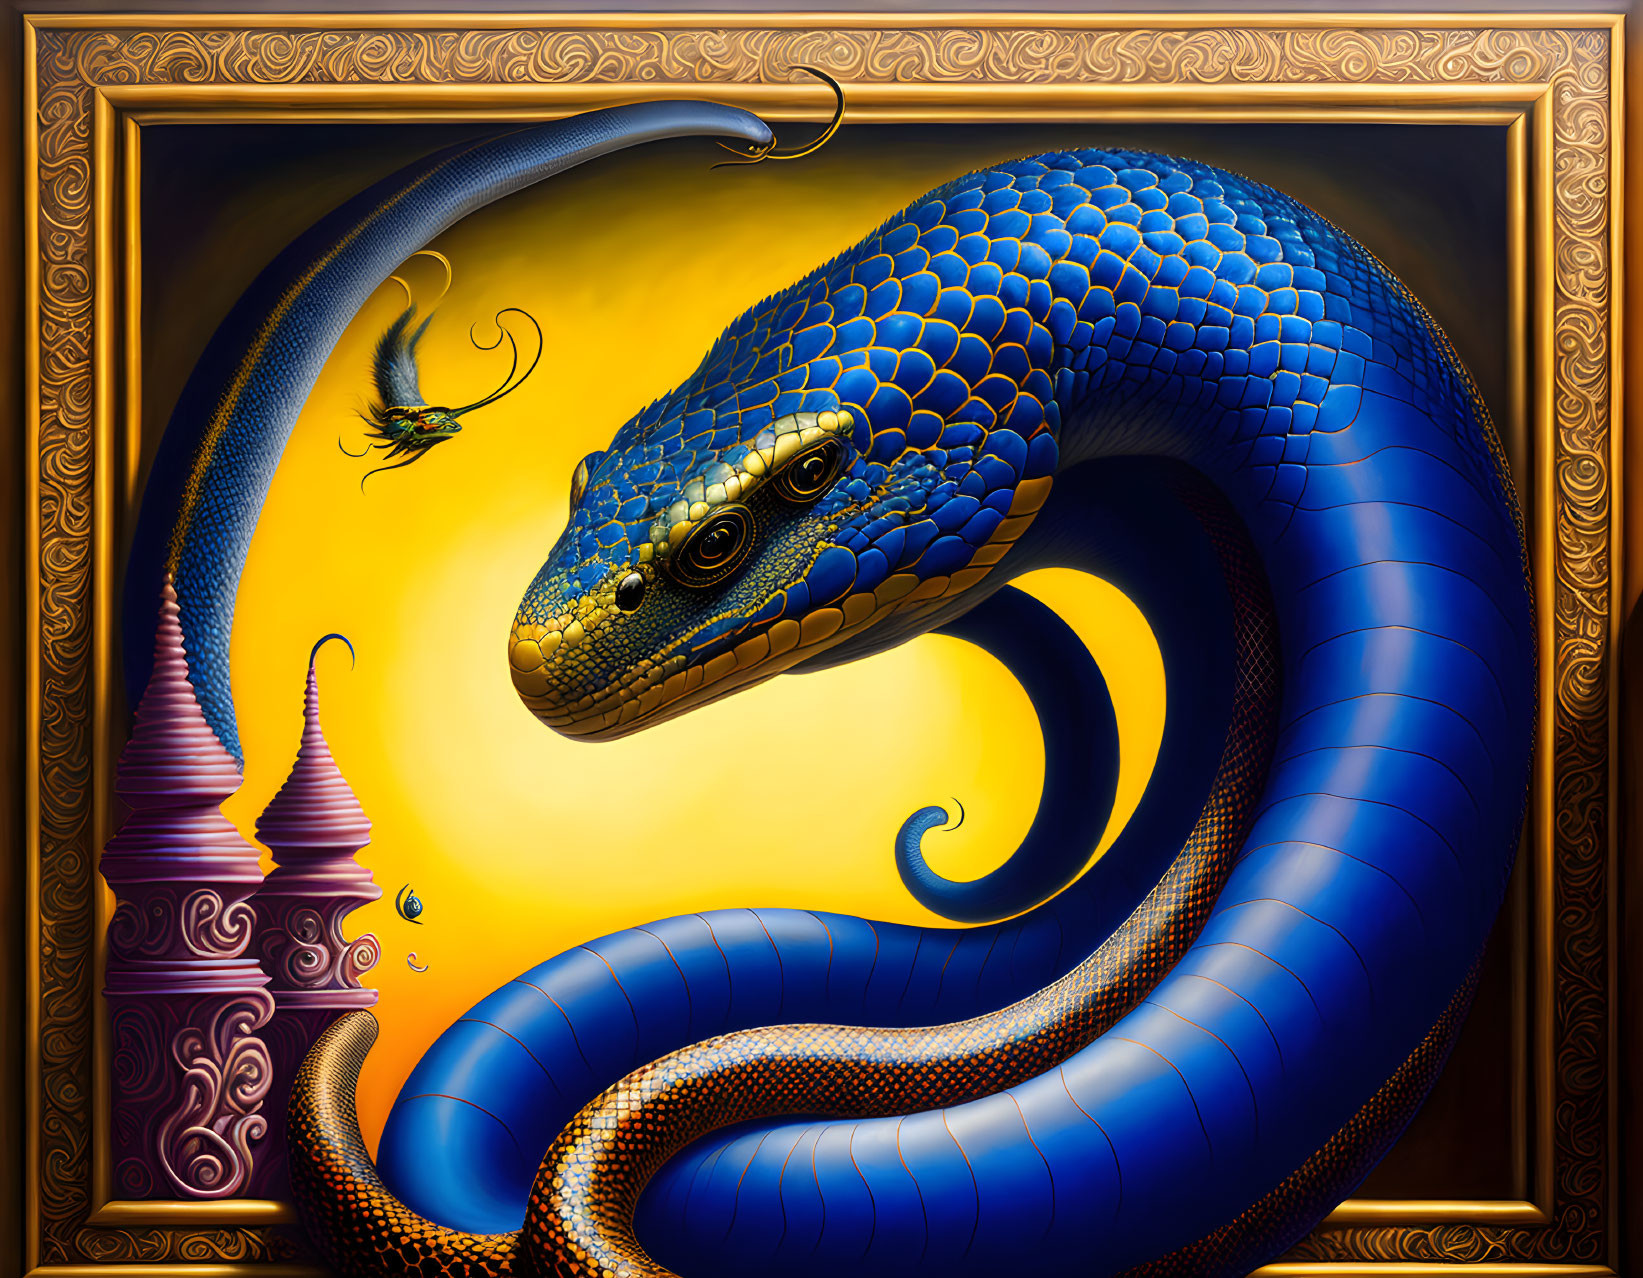 Blue King Cobra